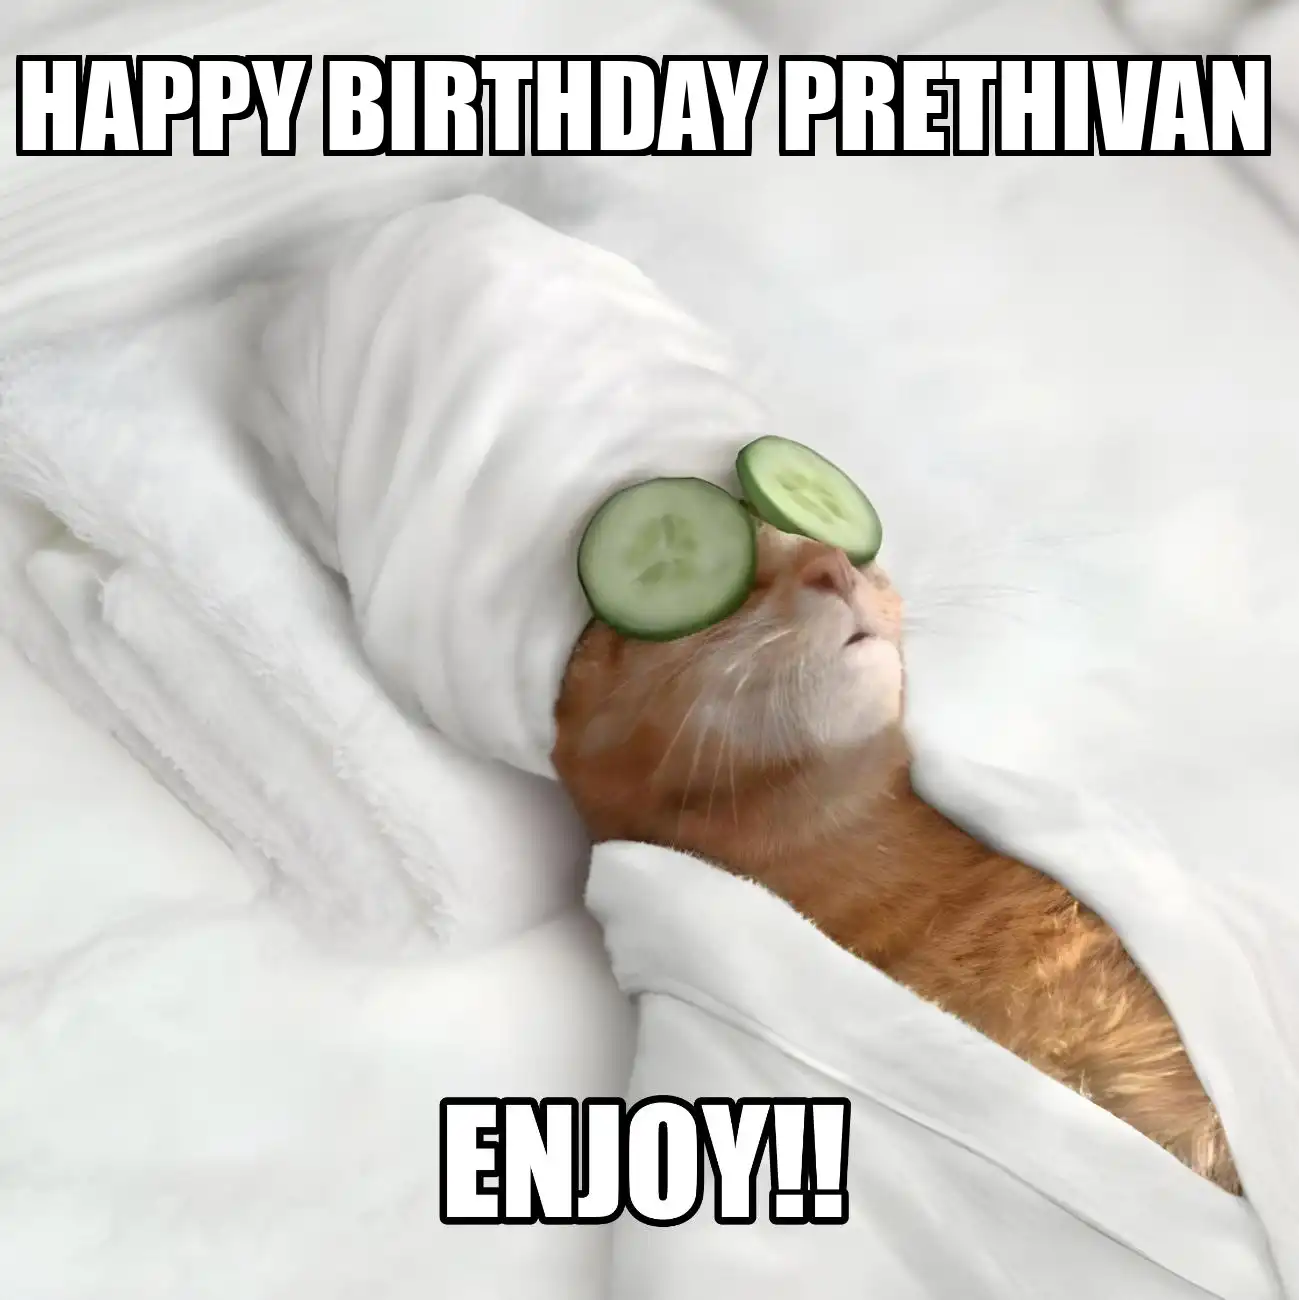 Happy Birthday Prethivan Enjoy Cat Meme